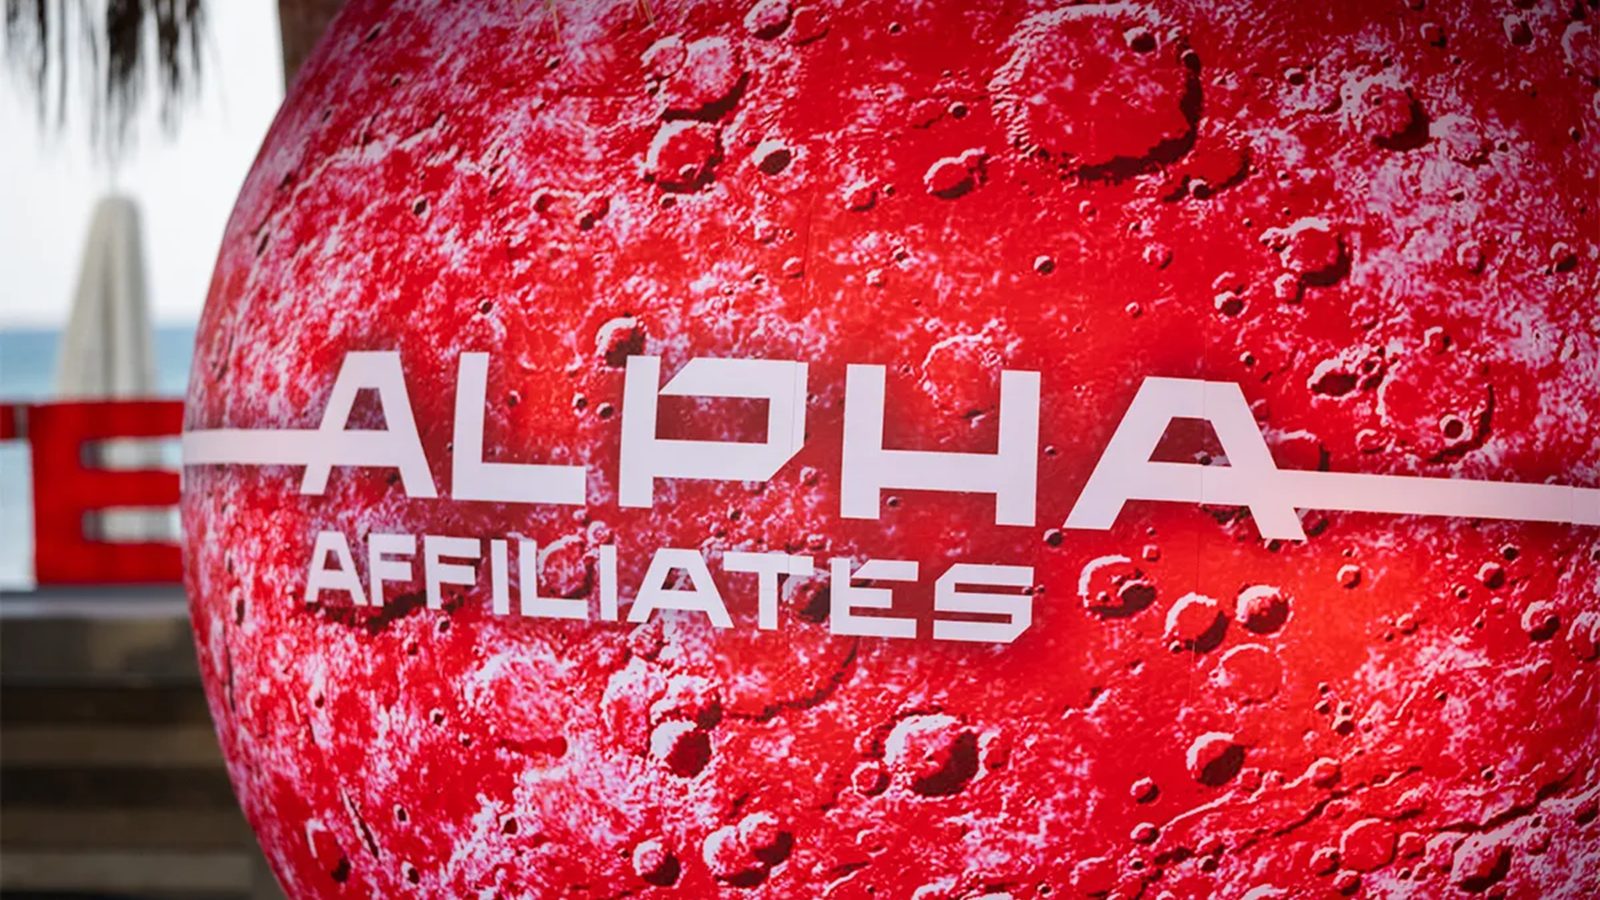 Alpha Affiliates Celebrates 11 Years of Success